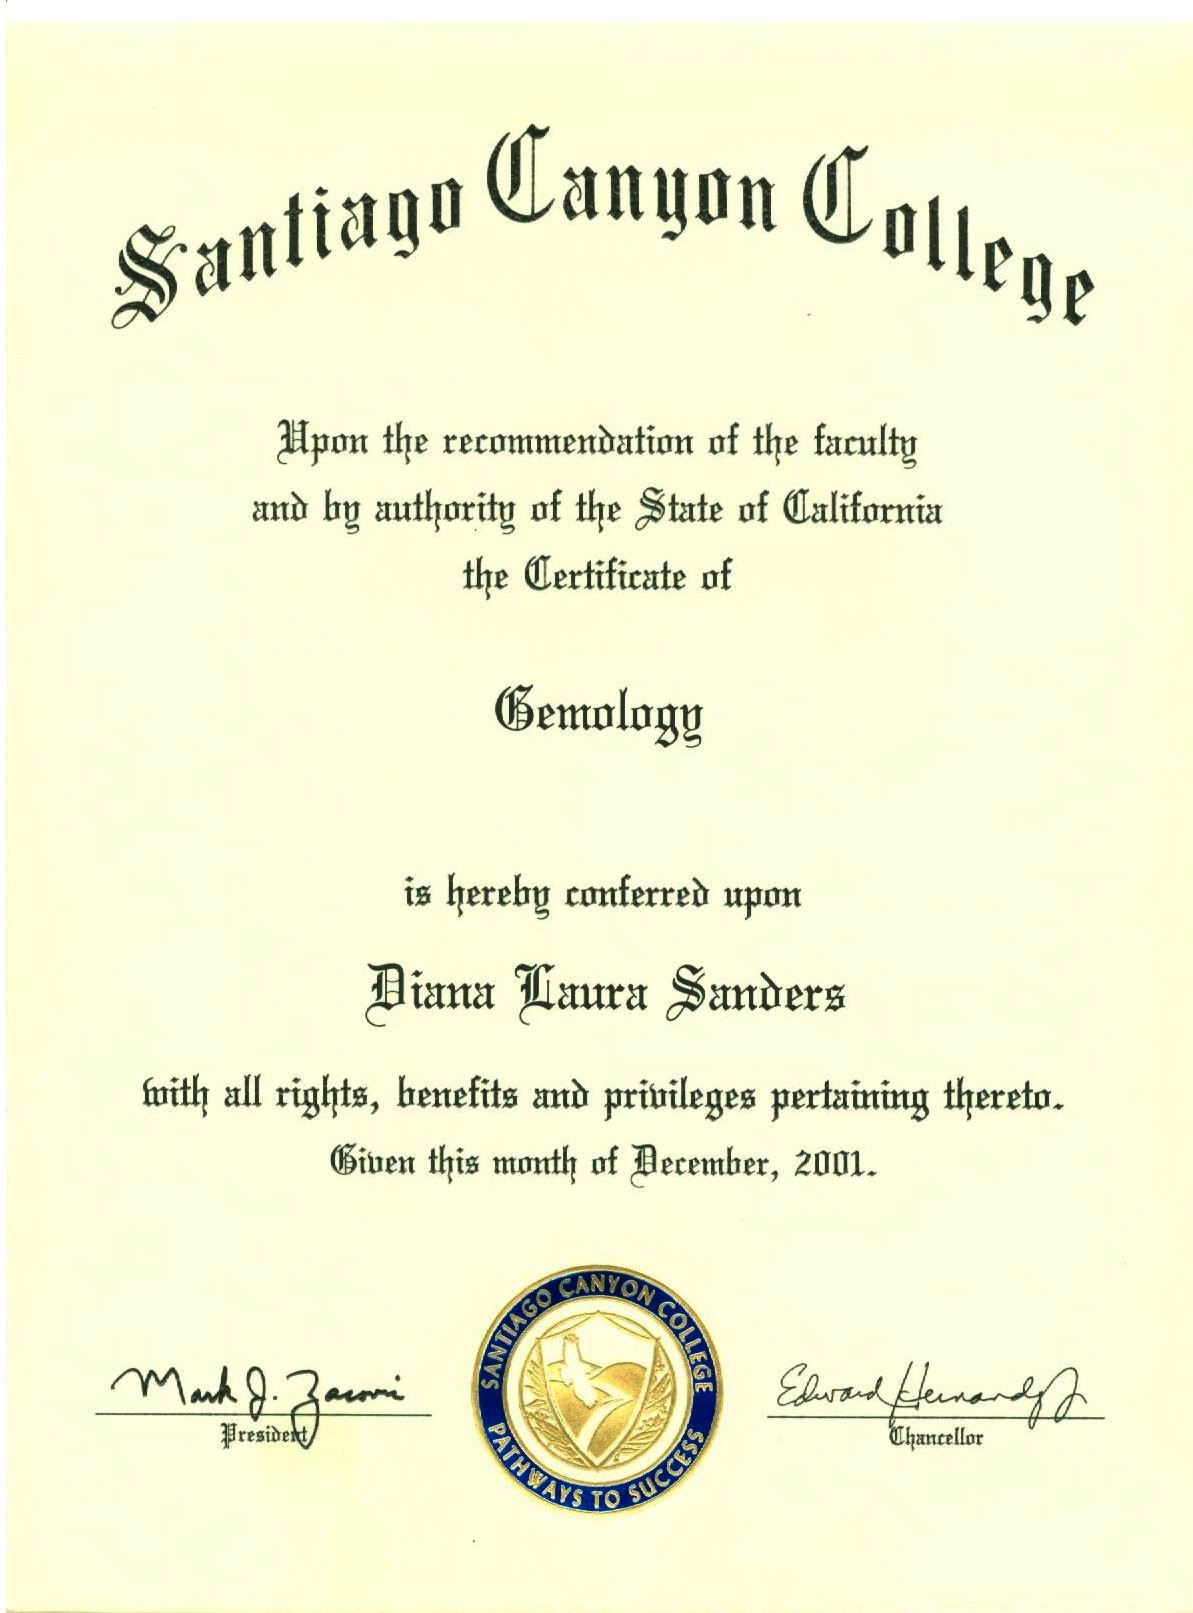 Santiago Canyon College gemology certificate